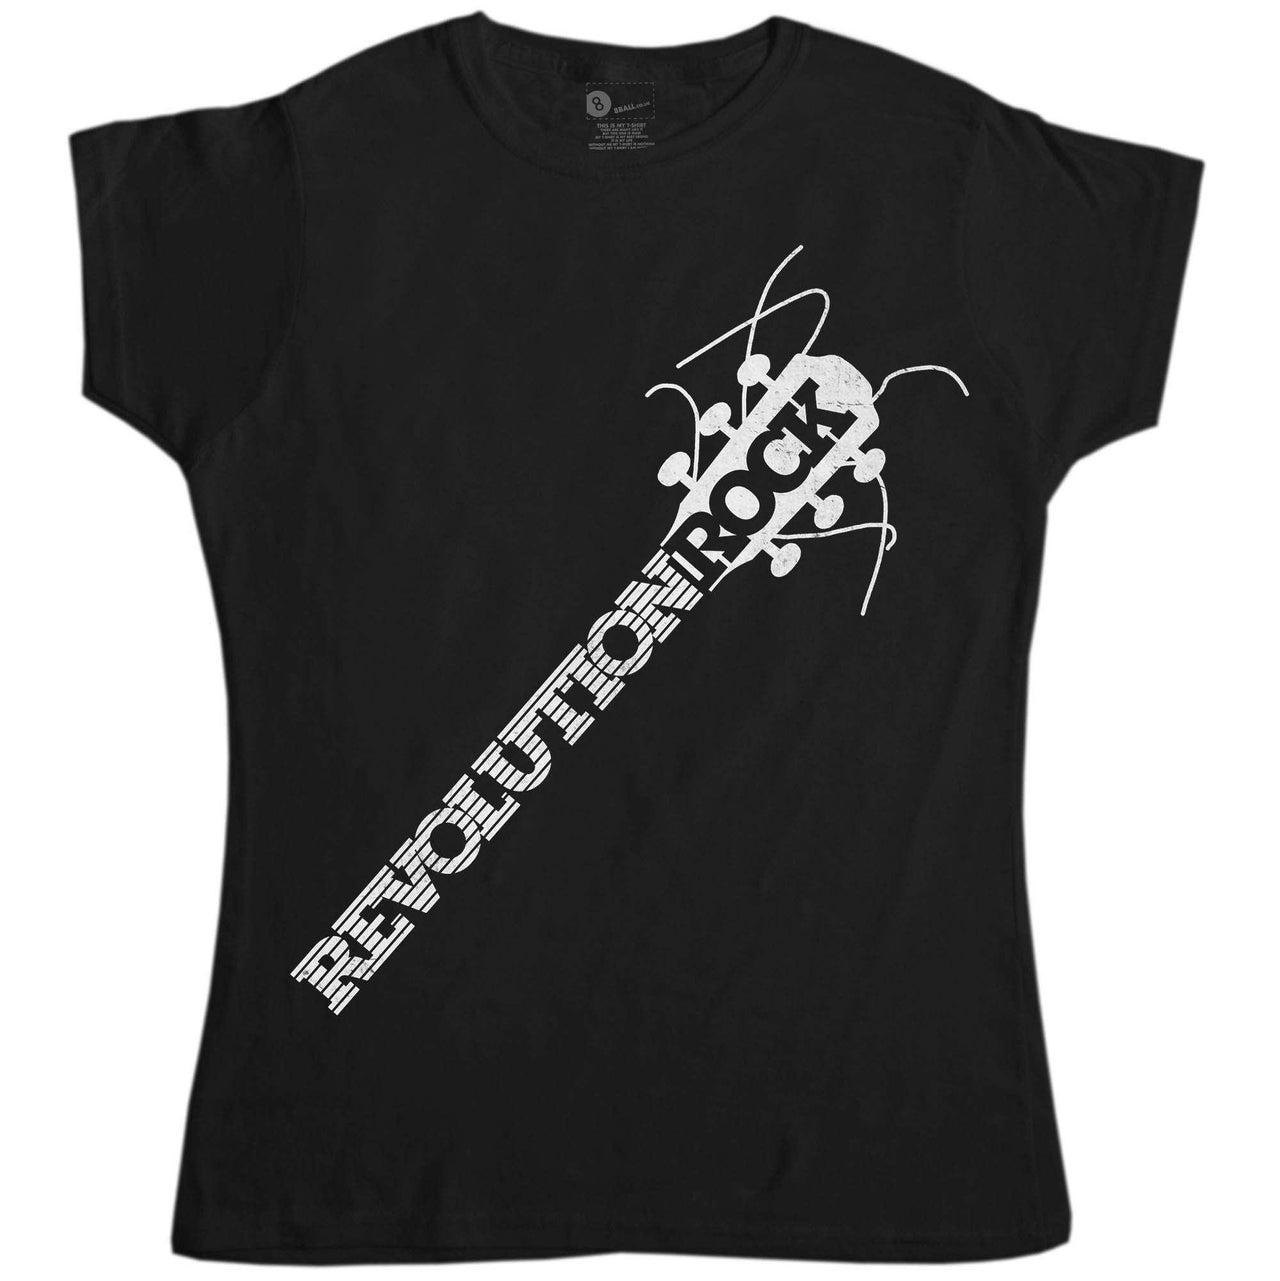 Revolution Rock Fitted Womens T-Shirt As Worn By Joan Jett And Kristen Stewart 8Ball